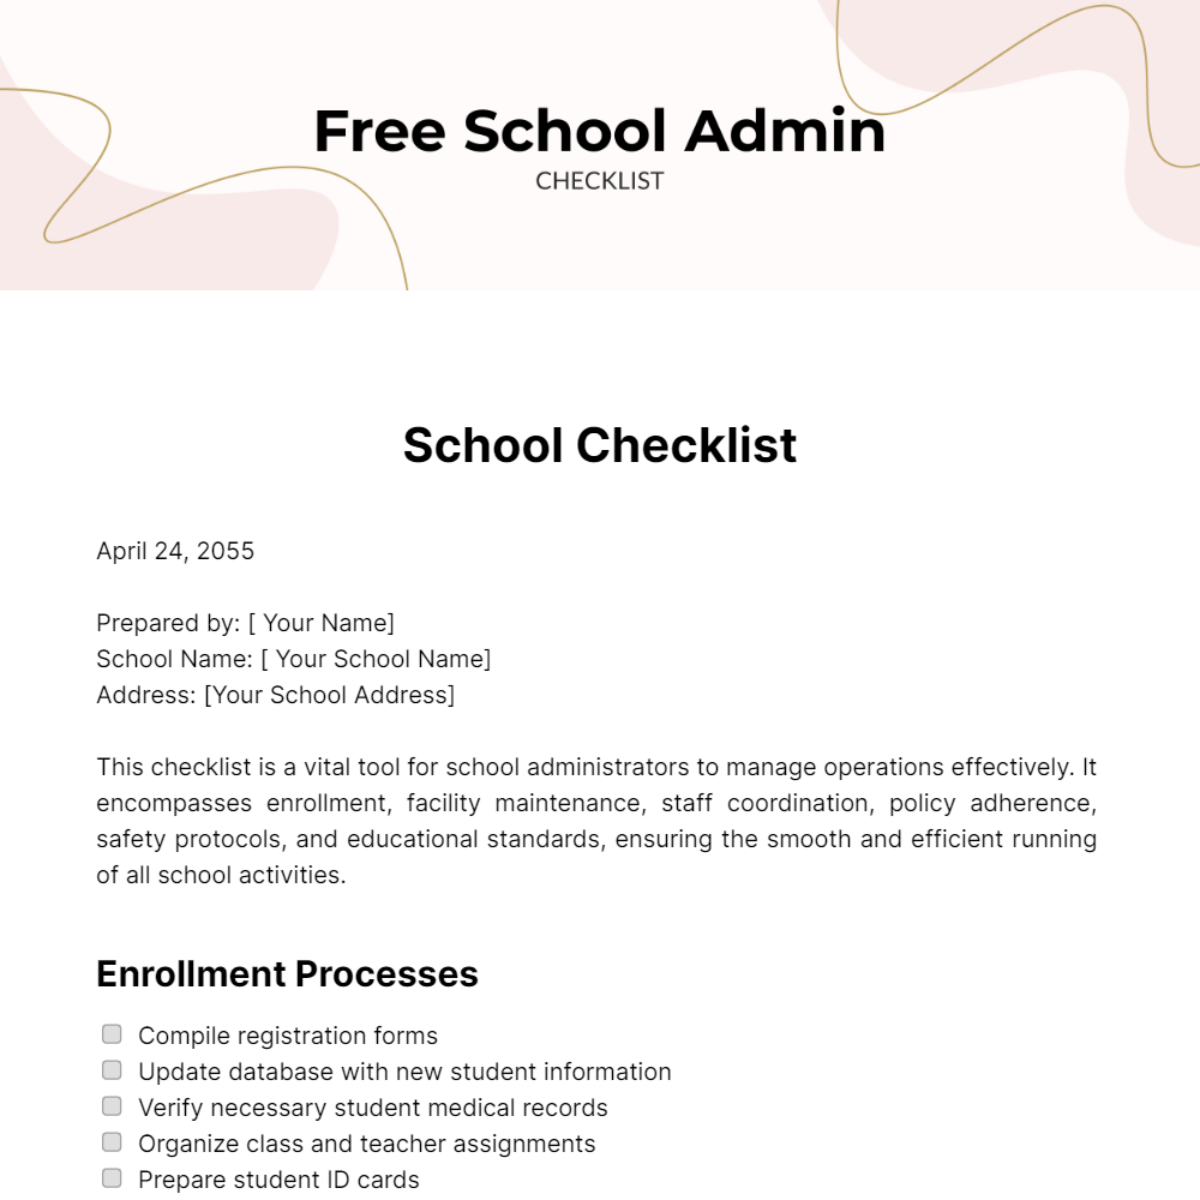 Free School Admin Checklist Template